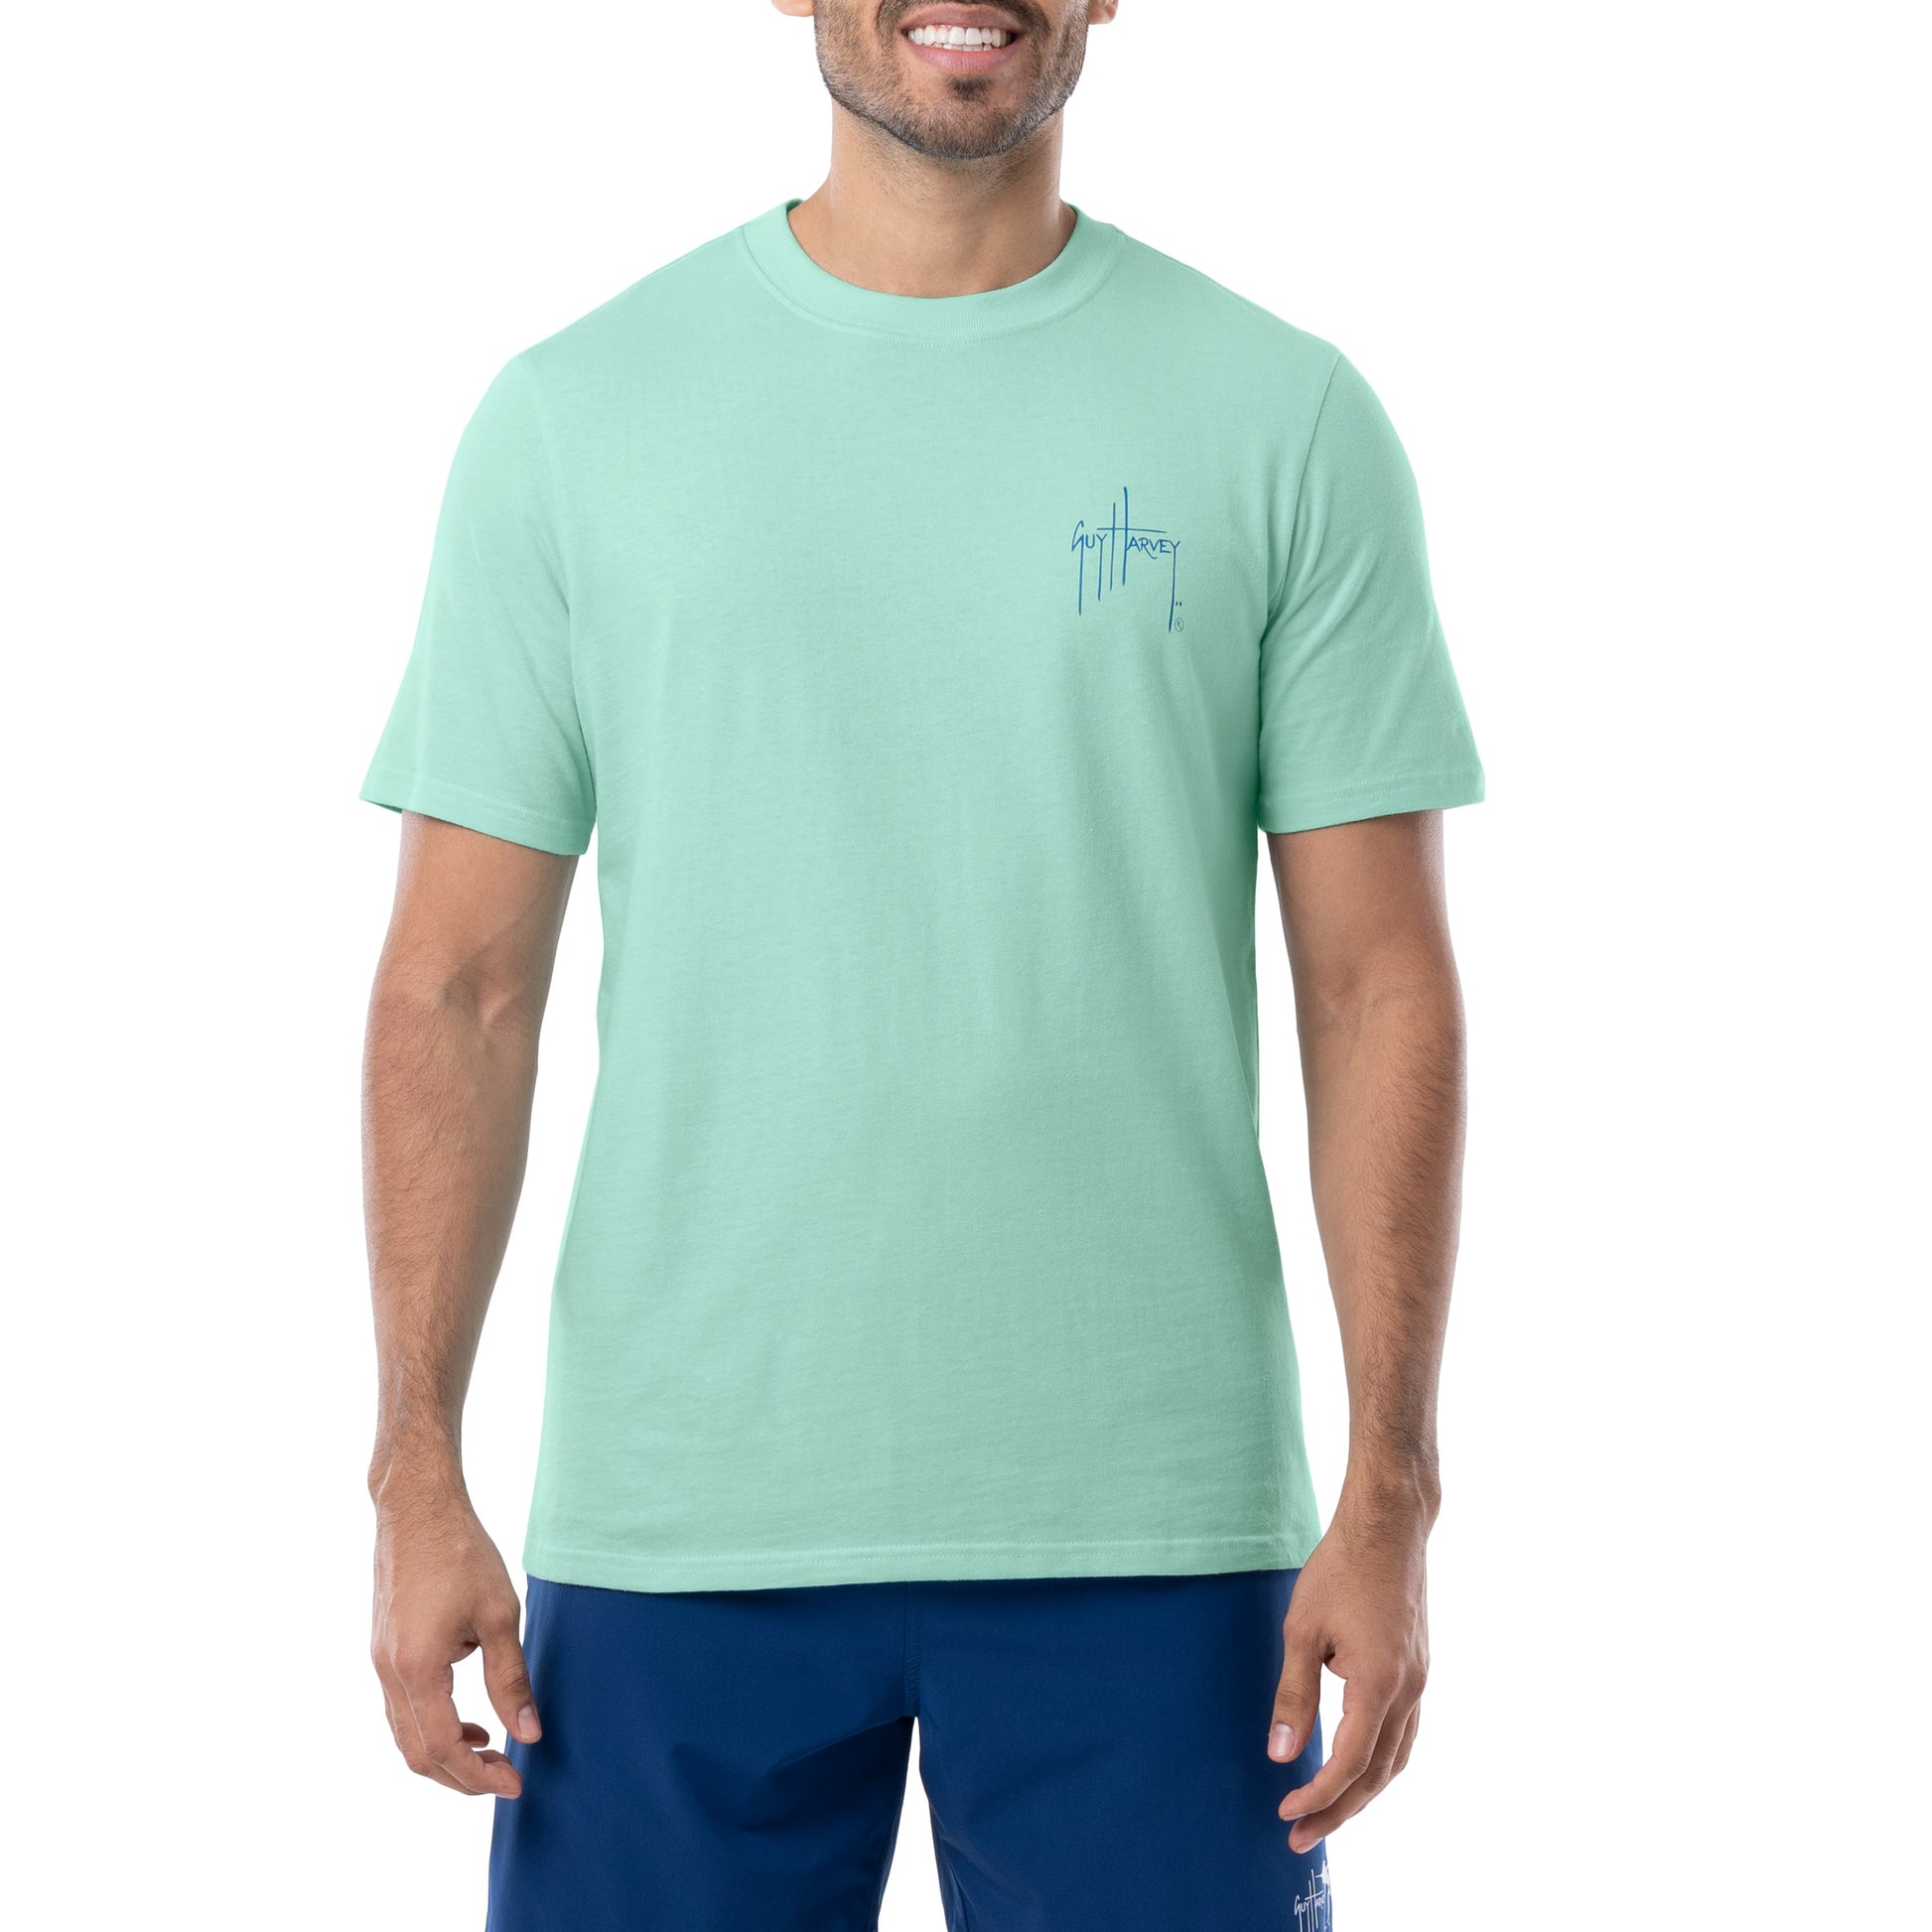 Men's Marlin and Sails Short Sleeve T-Shirt – Guy Harvey